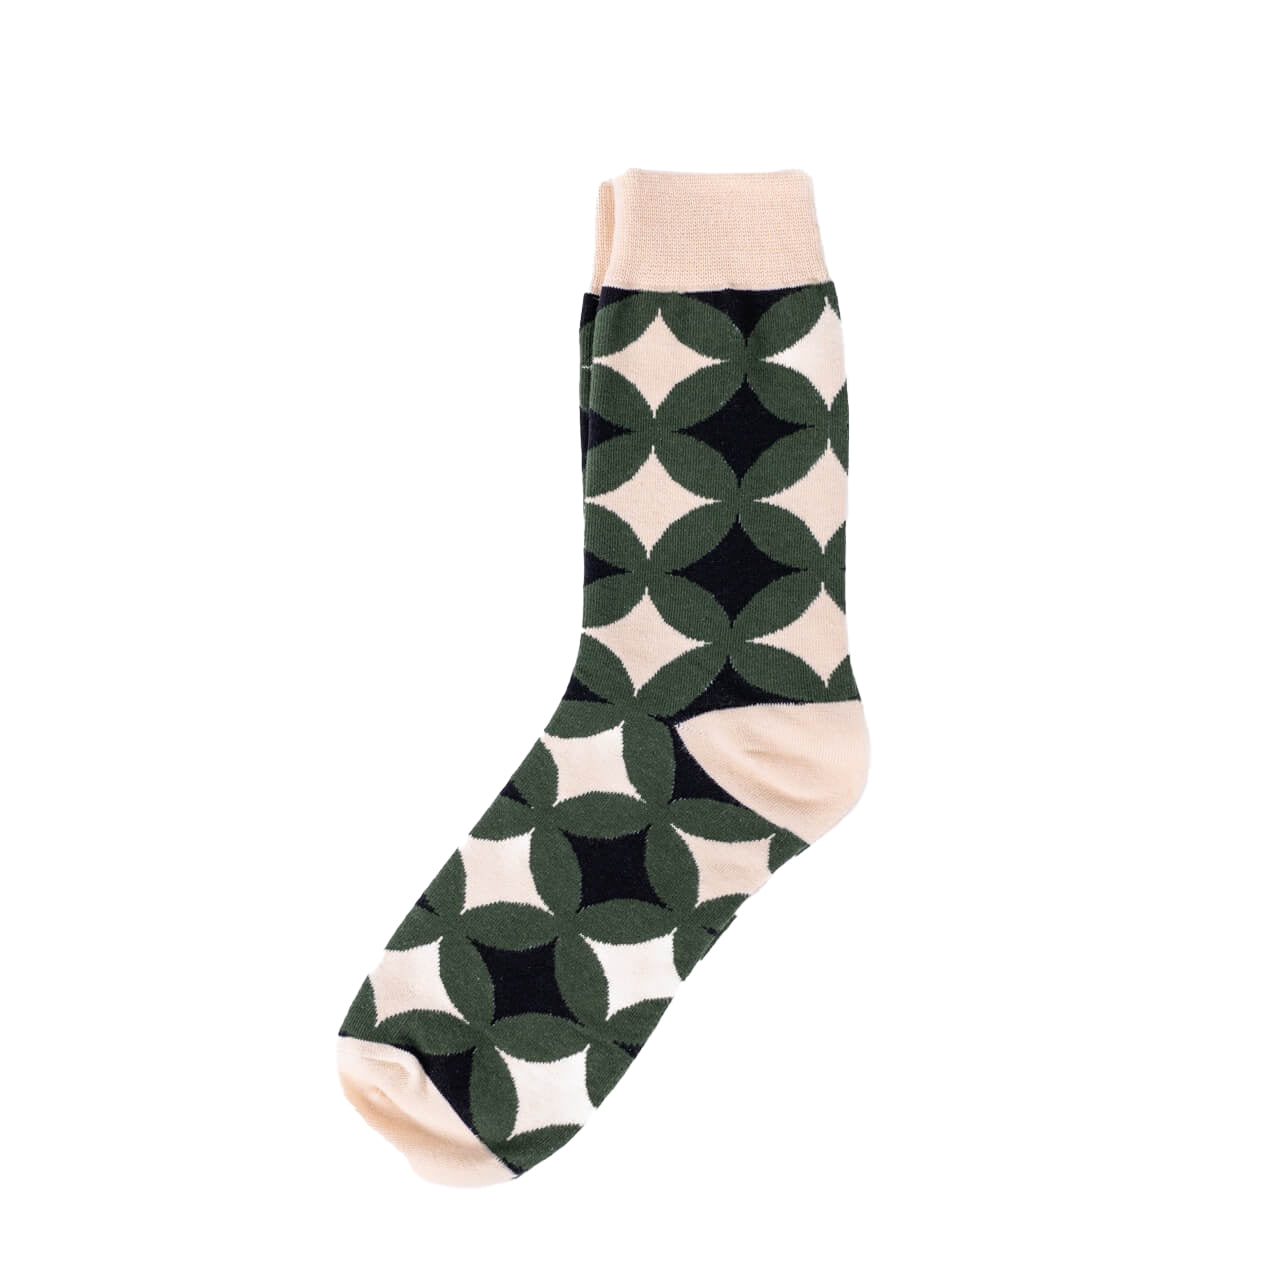 Green and Beige Patterned Fun Dress Socks